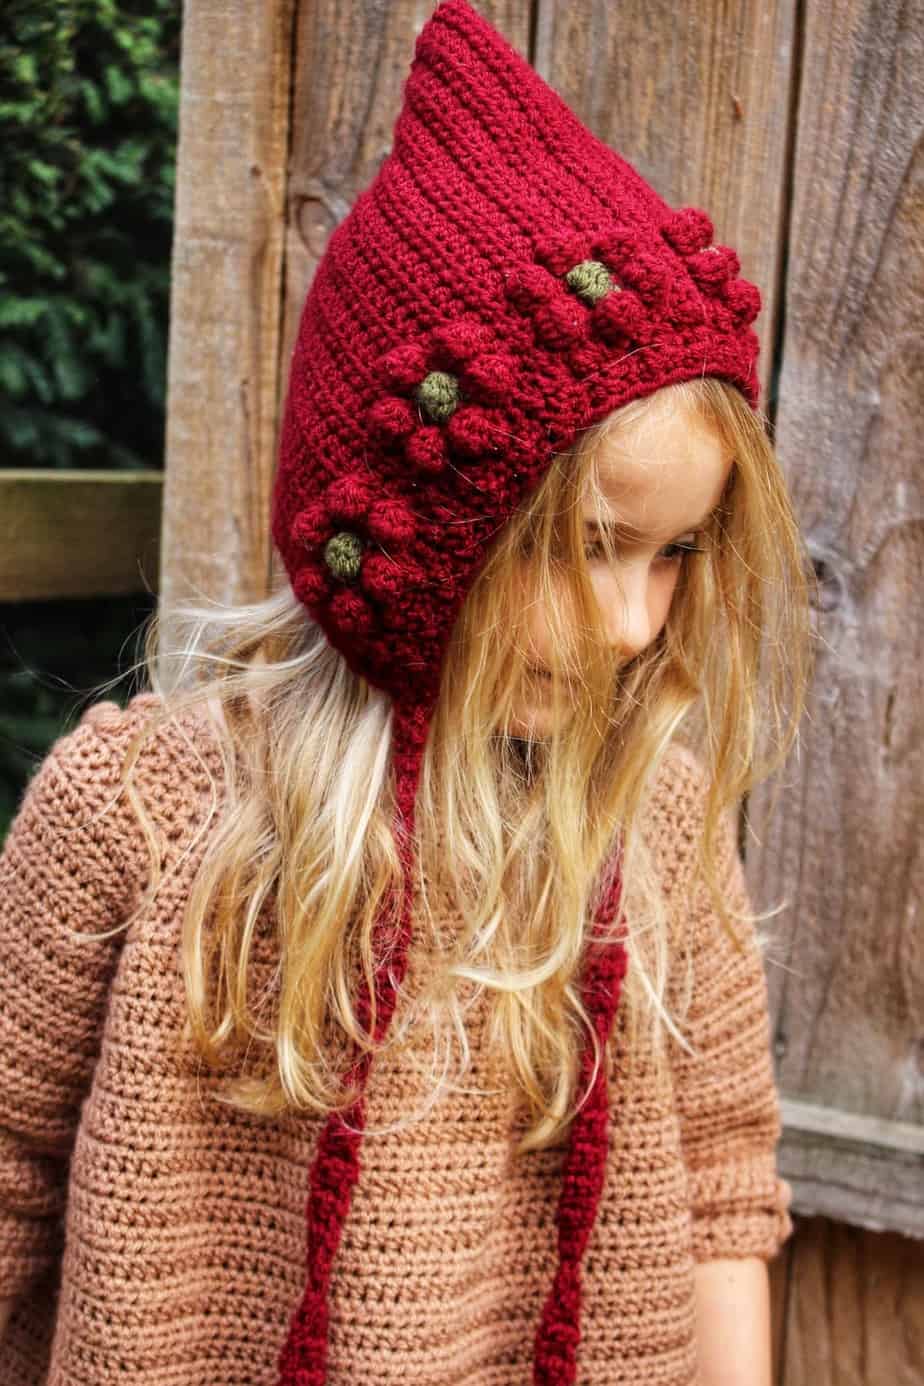 Young girl wearing red crochet flower bonnet.